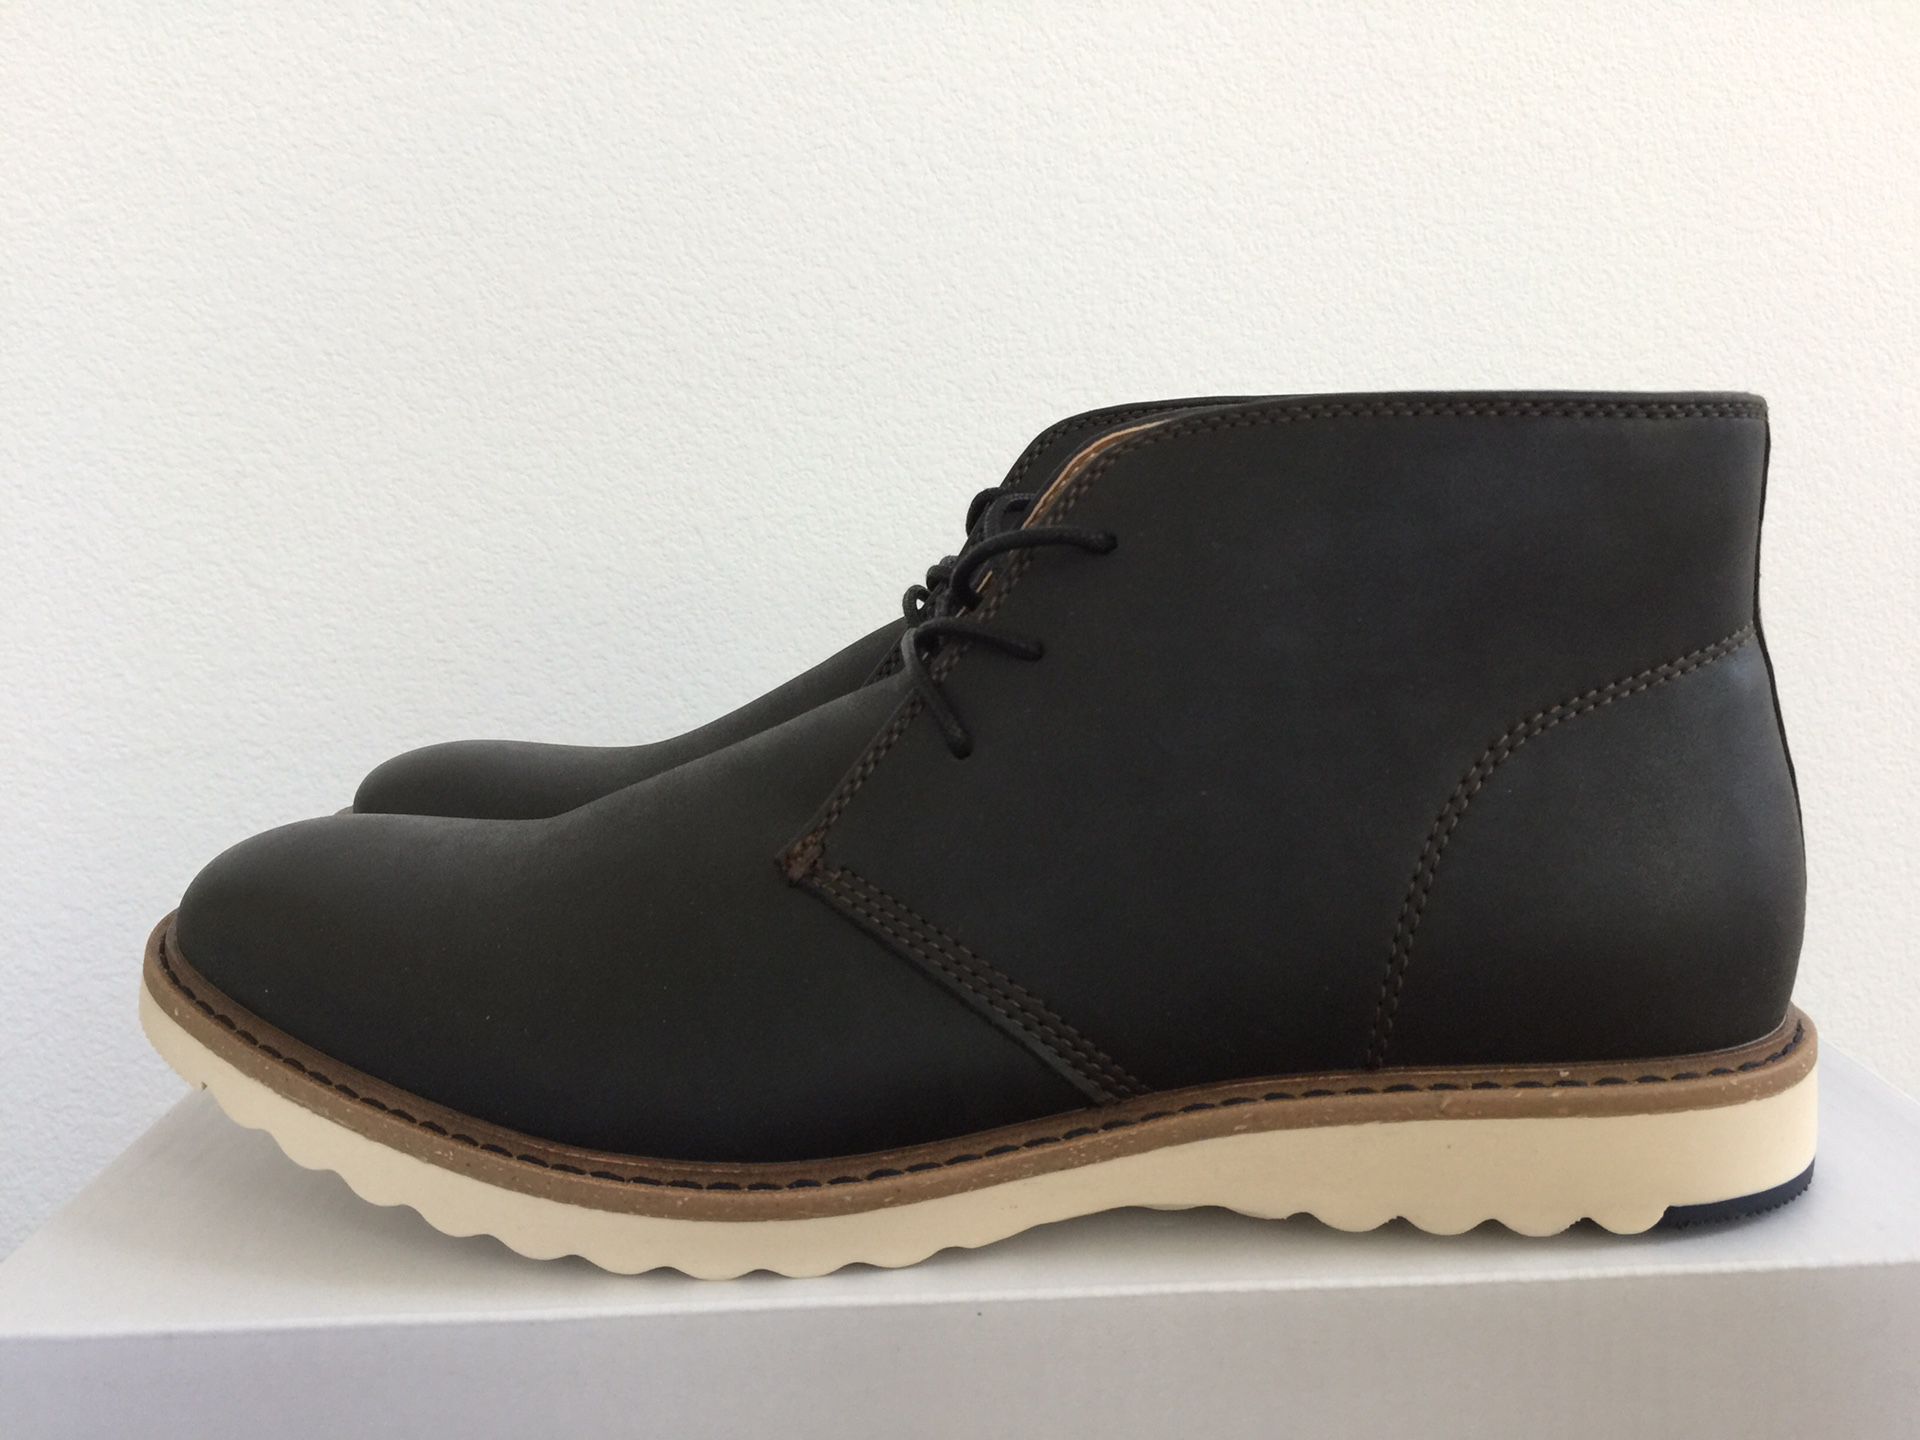 Aldo Chukka Boots Size 9.5